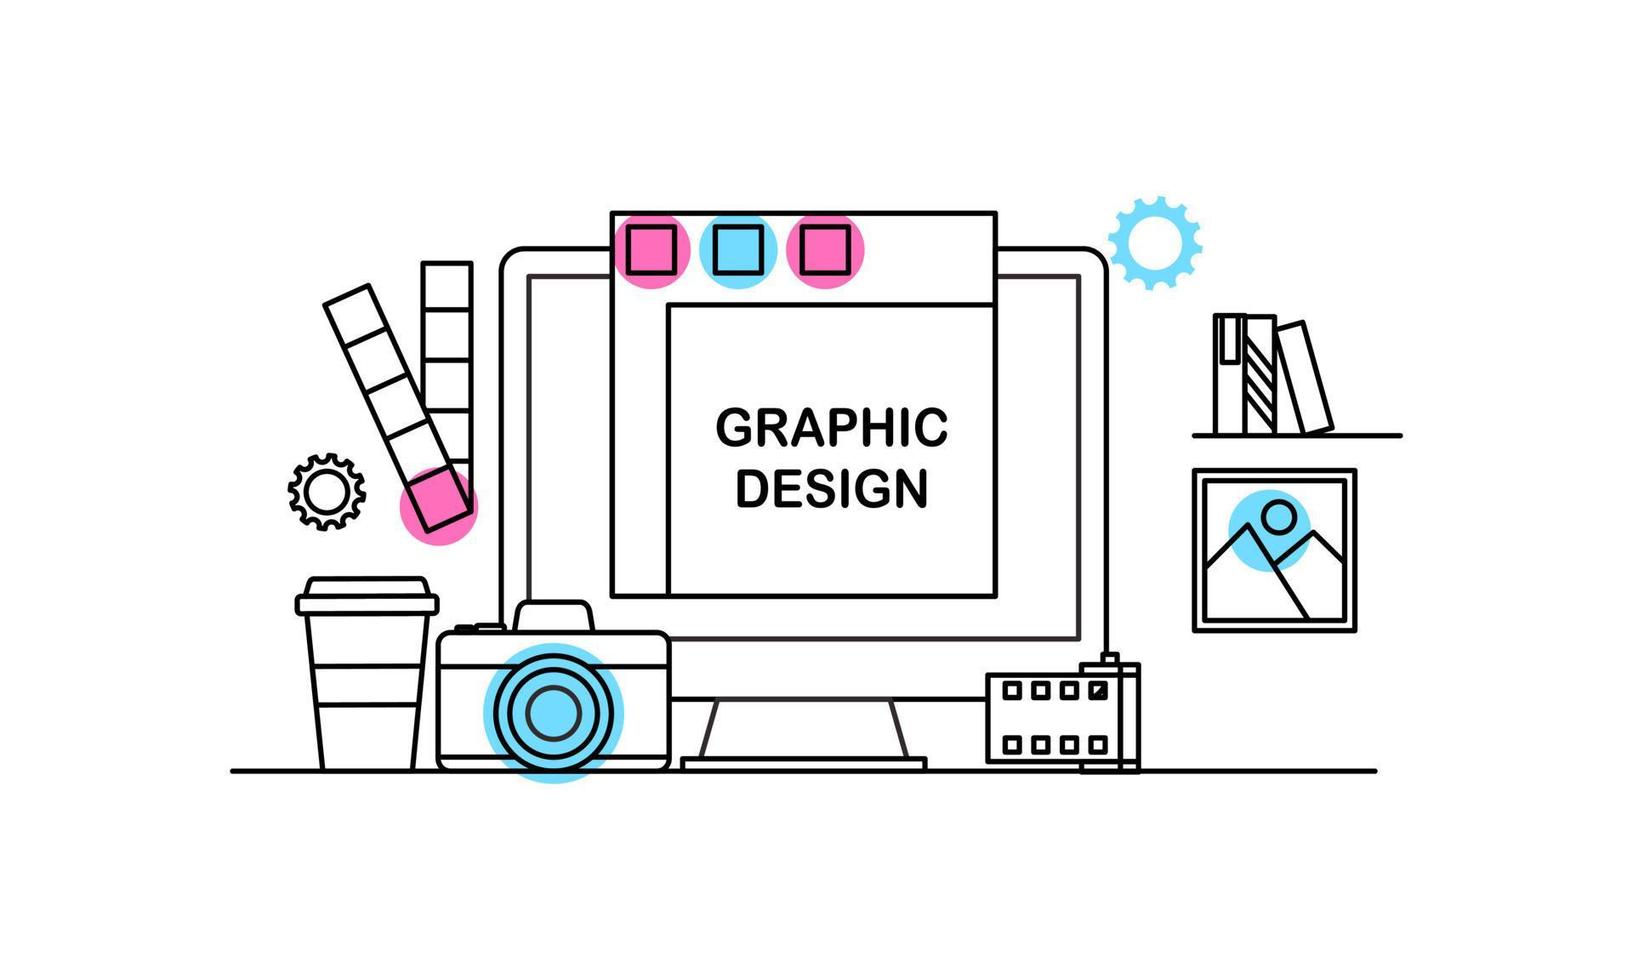 linear abstrato de conceitos de design gráfico, web design e desenvolvimento. elementos para aplicativos móveis e web. vetor